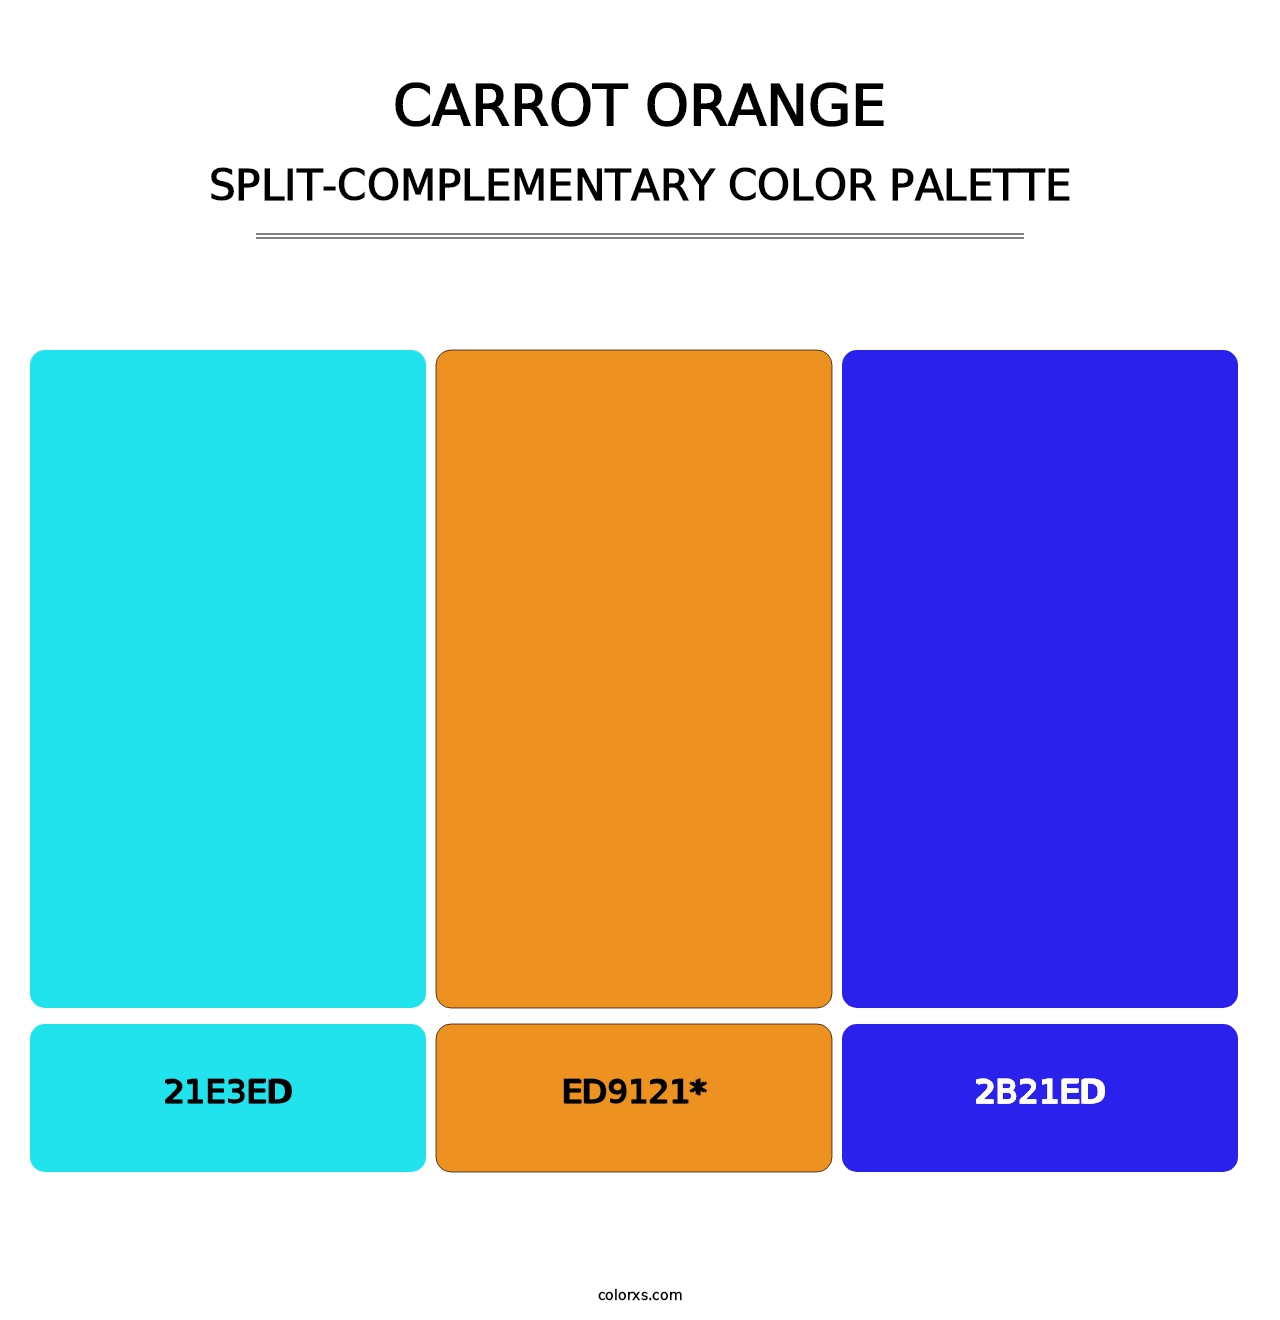 Carrot Orange - Split-Complementary Color Palette